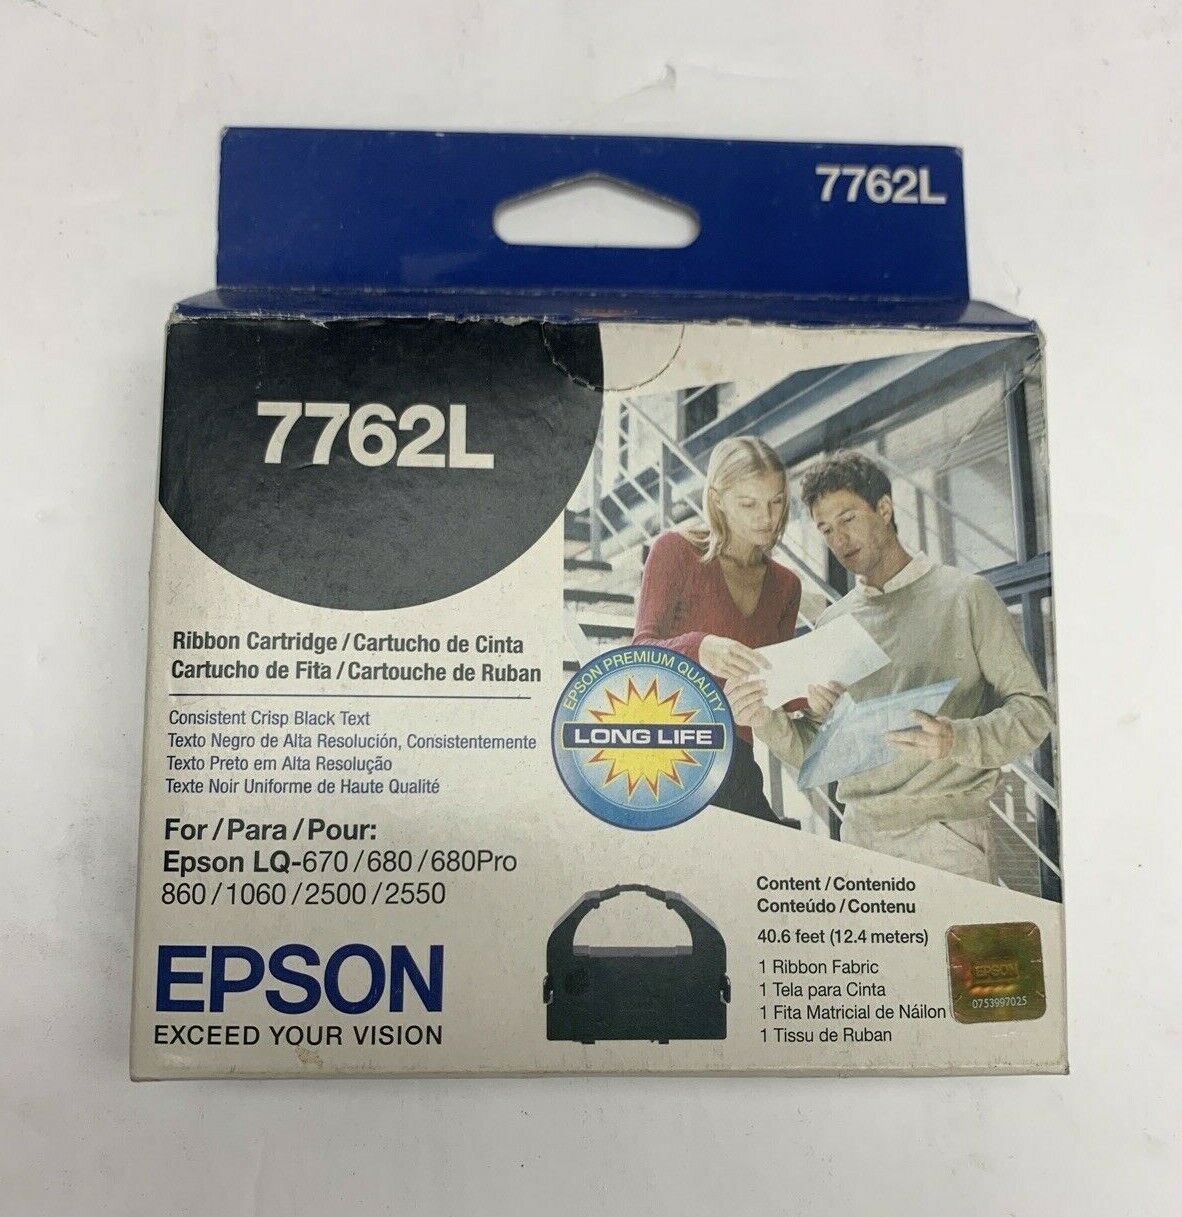 New Genuine Epson Ribbon Cartridge 7753 For LQ-200 300 500 870...